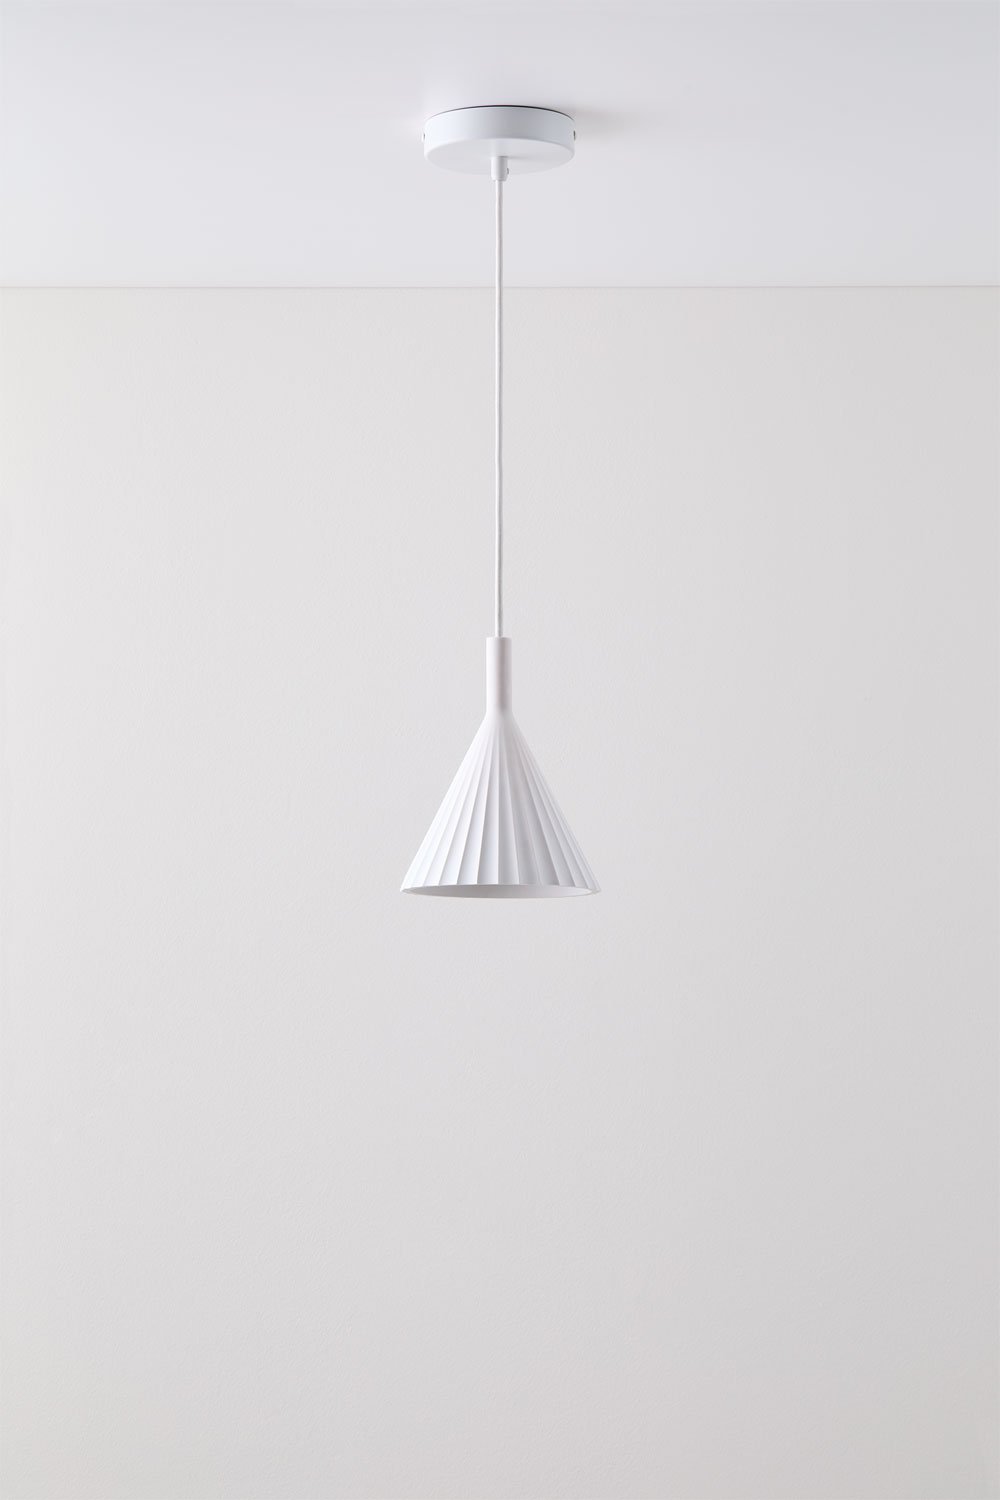 Lydon Gips LED-plafondlamp, galerij beeld 1